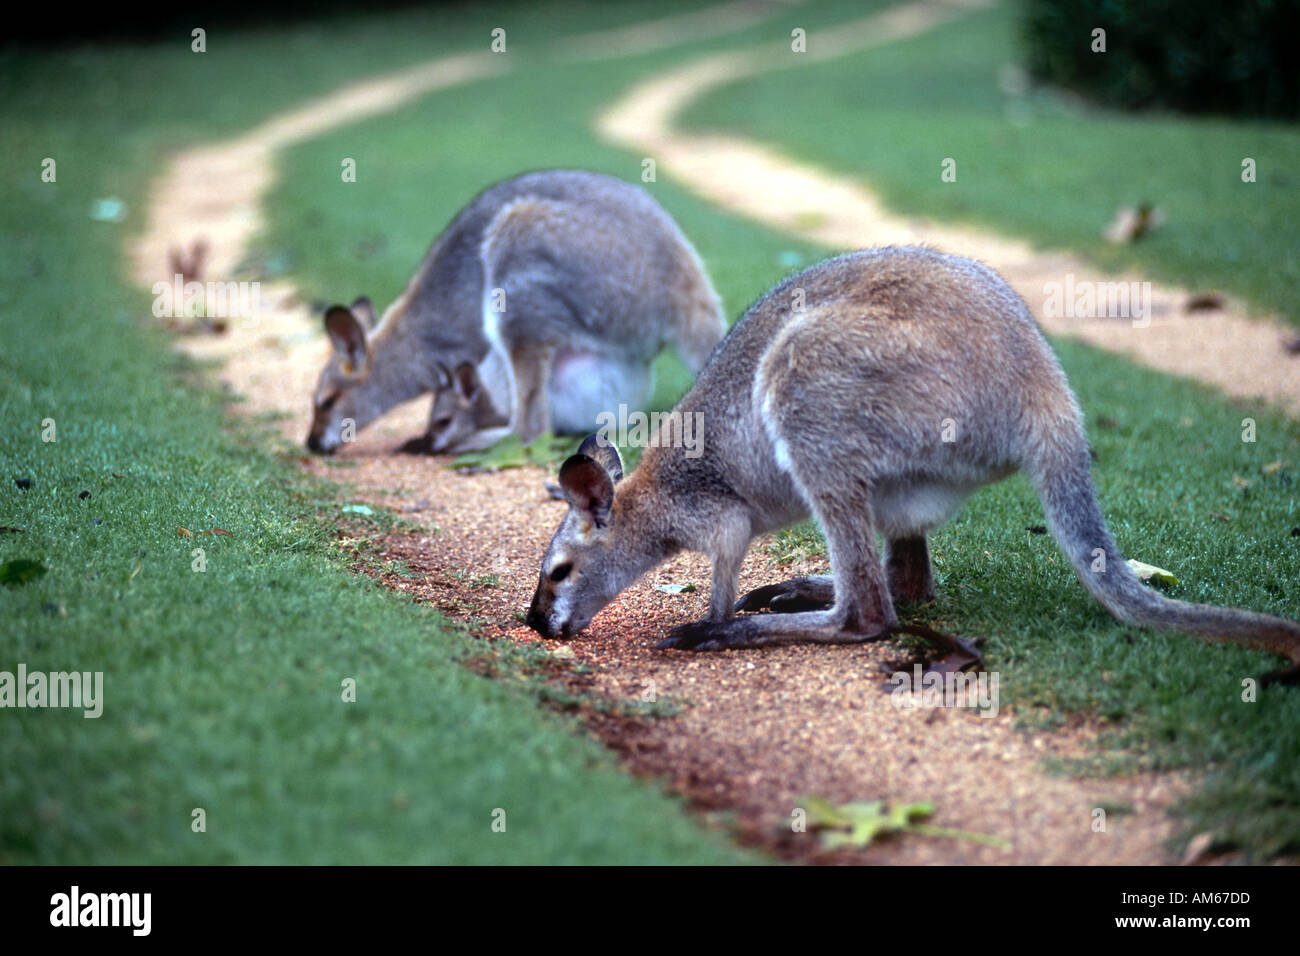 Novembre 1995 Bunya Mountains National Park Queensland Australia i canguri grigio alimentazione Foto Stock